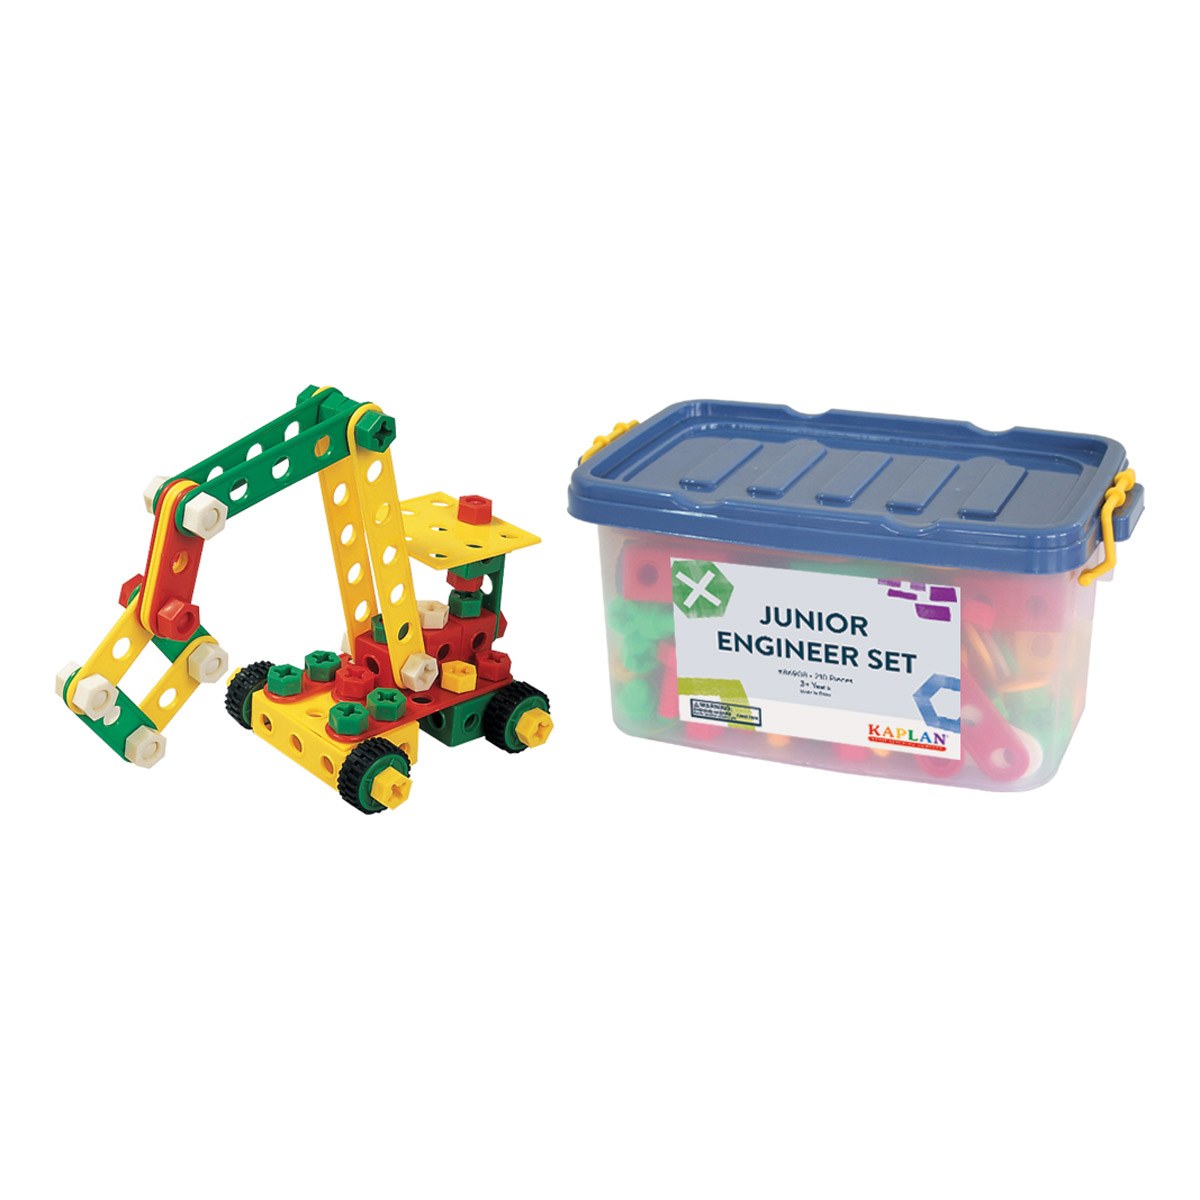 Joyn Toys Junior Engineer Creative Building Set